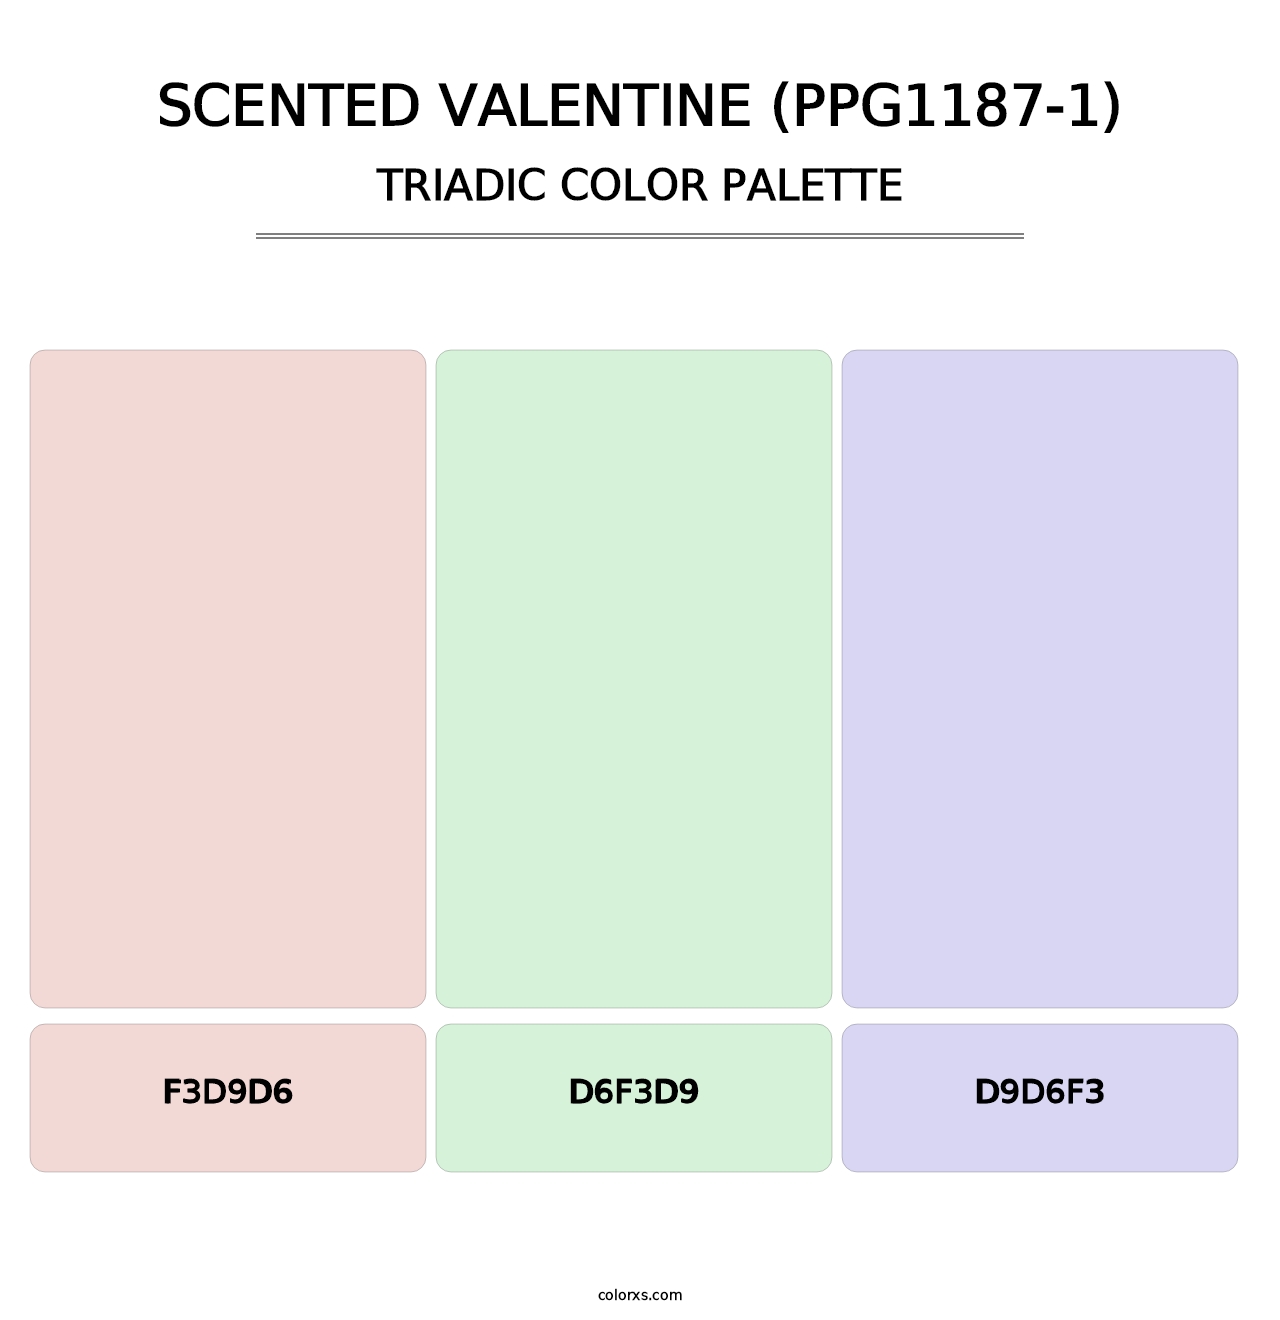 Scented Valentine (PPG1187-1) - Triadic Color Palette